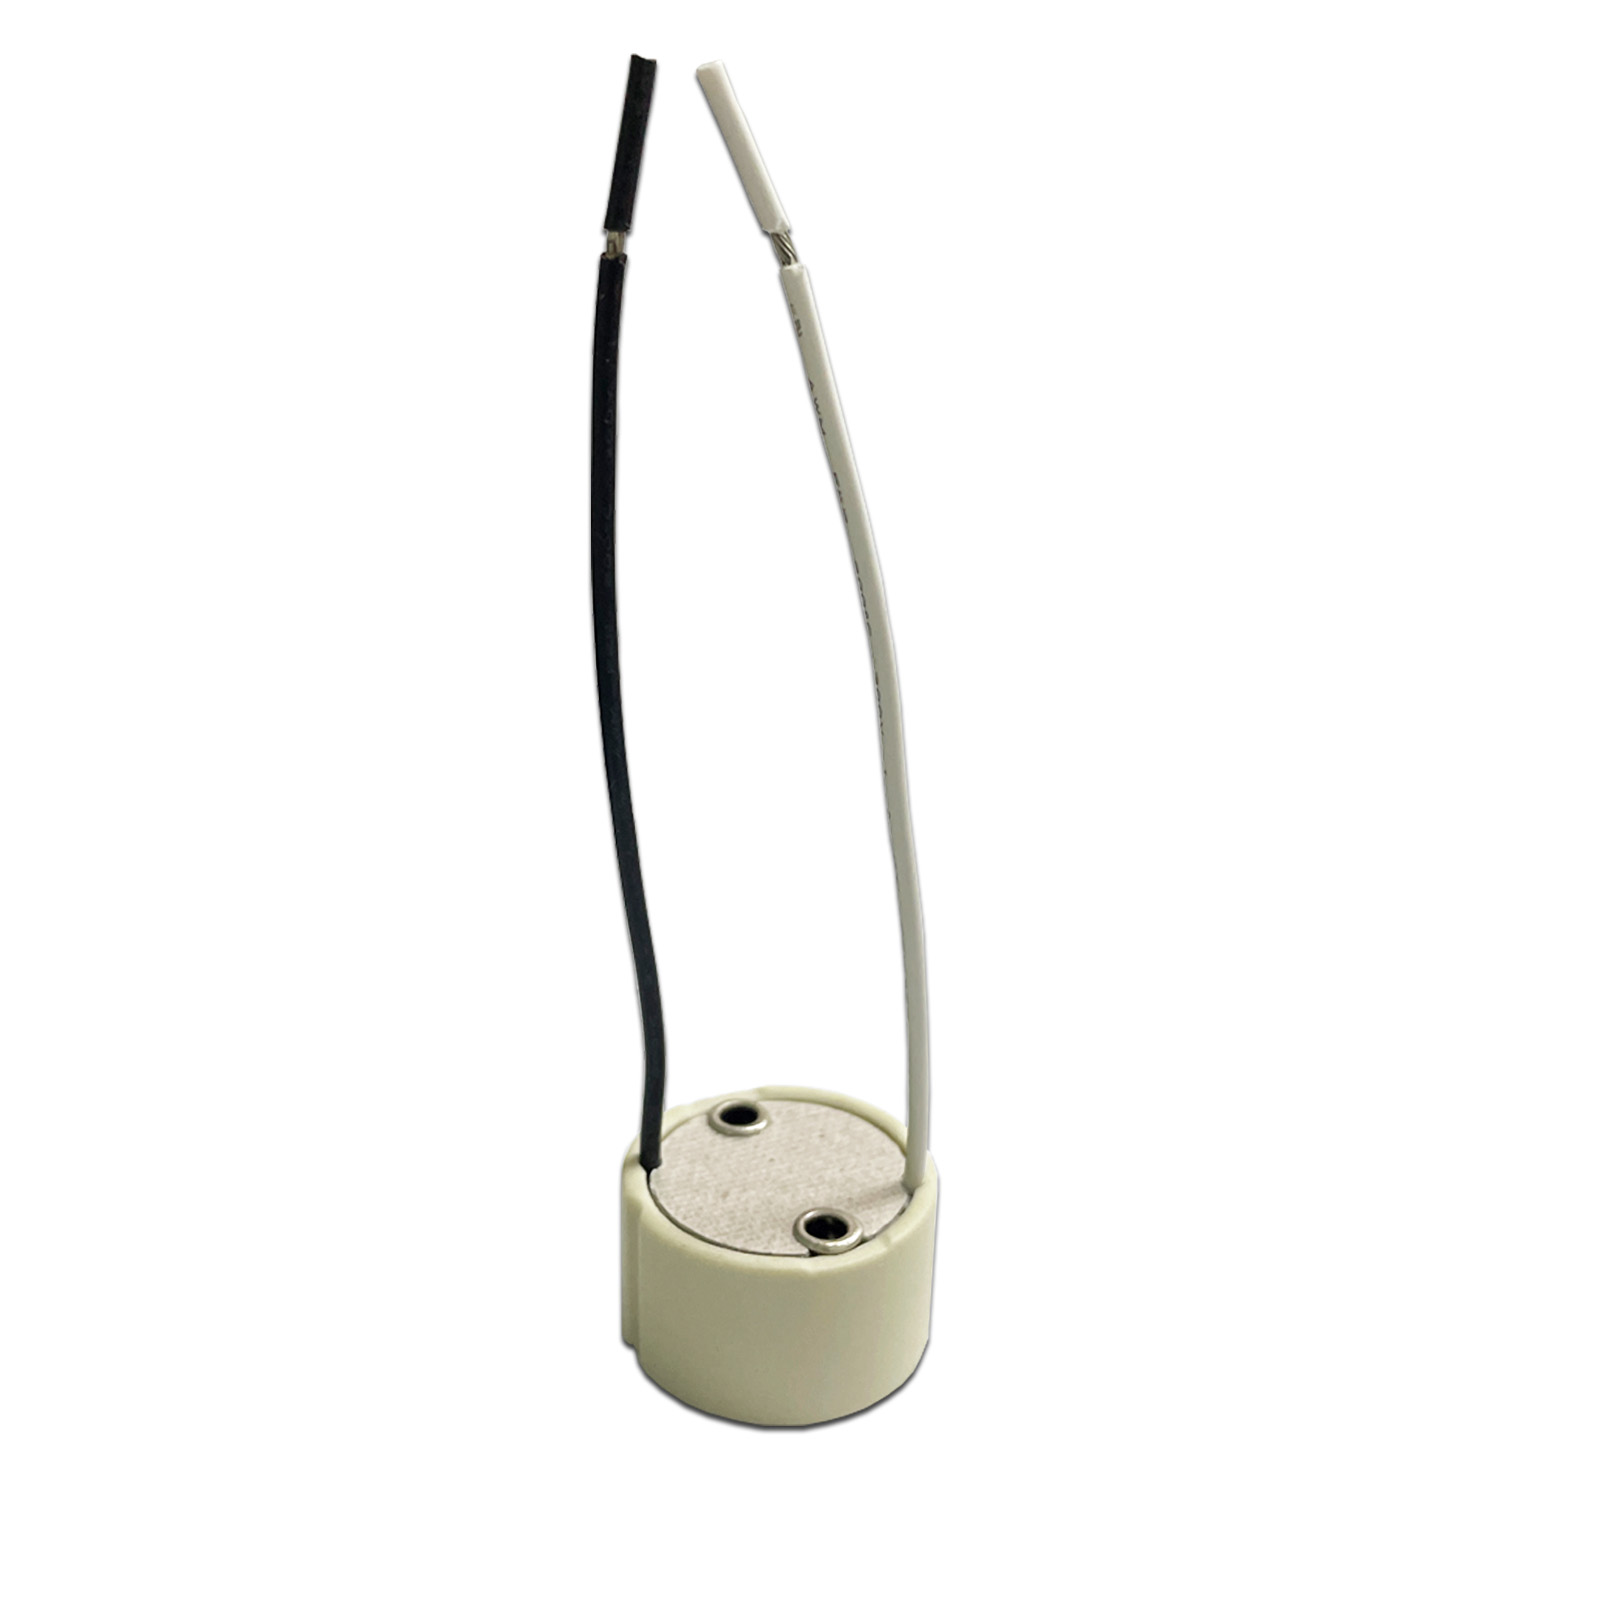 GU10 Ceramic Lampholder Base Porcelain Fittings Lamp Holder With 029 033 Temperature Control